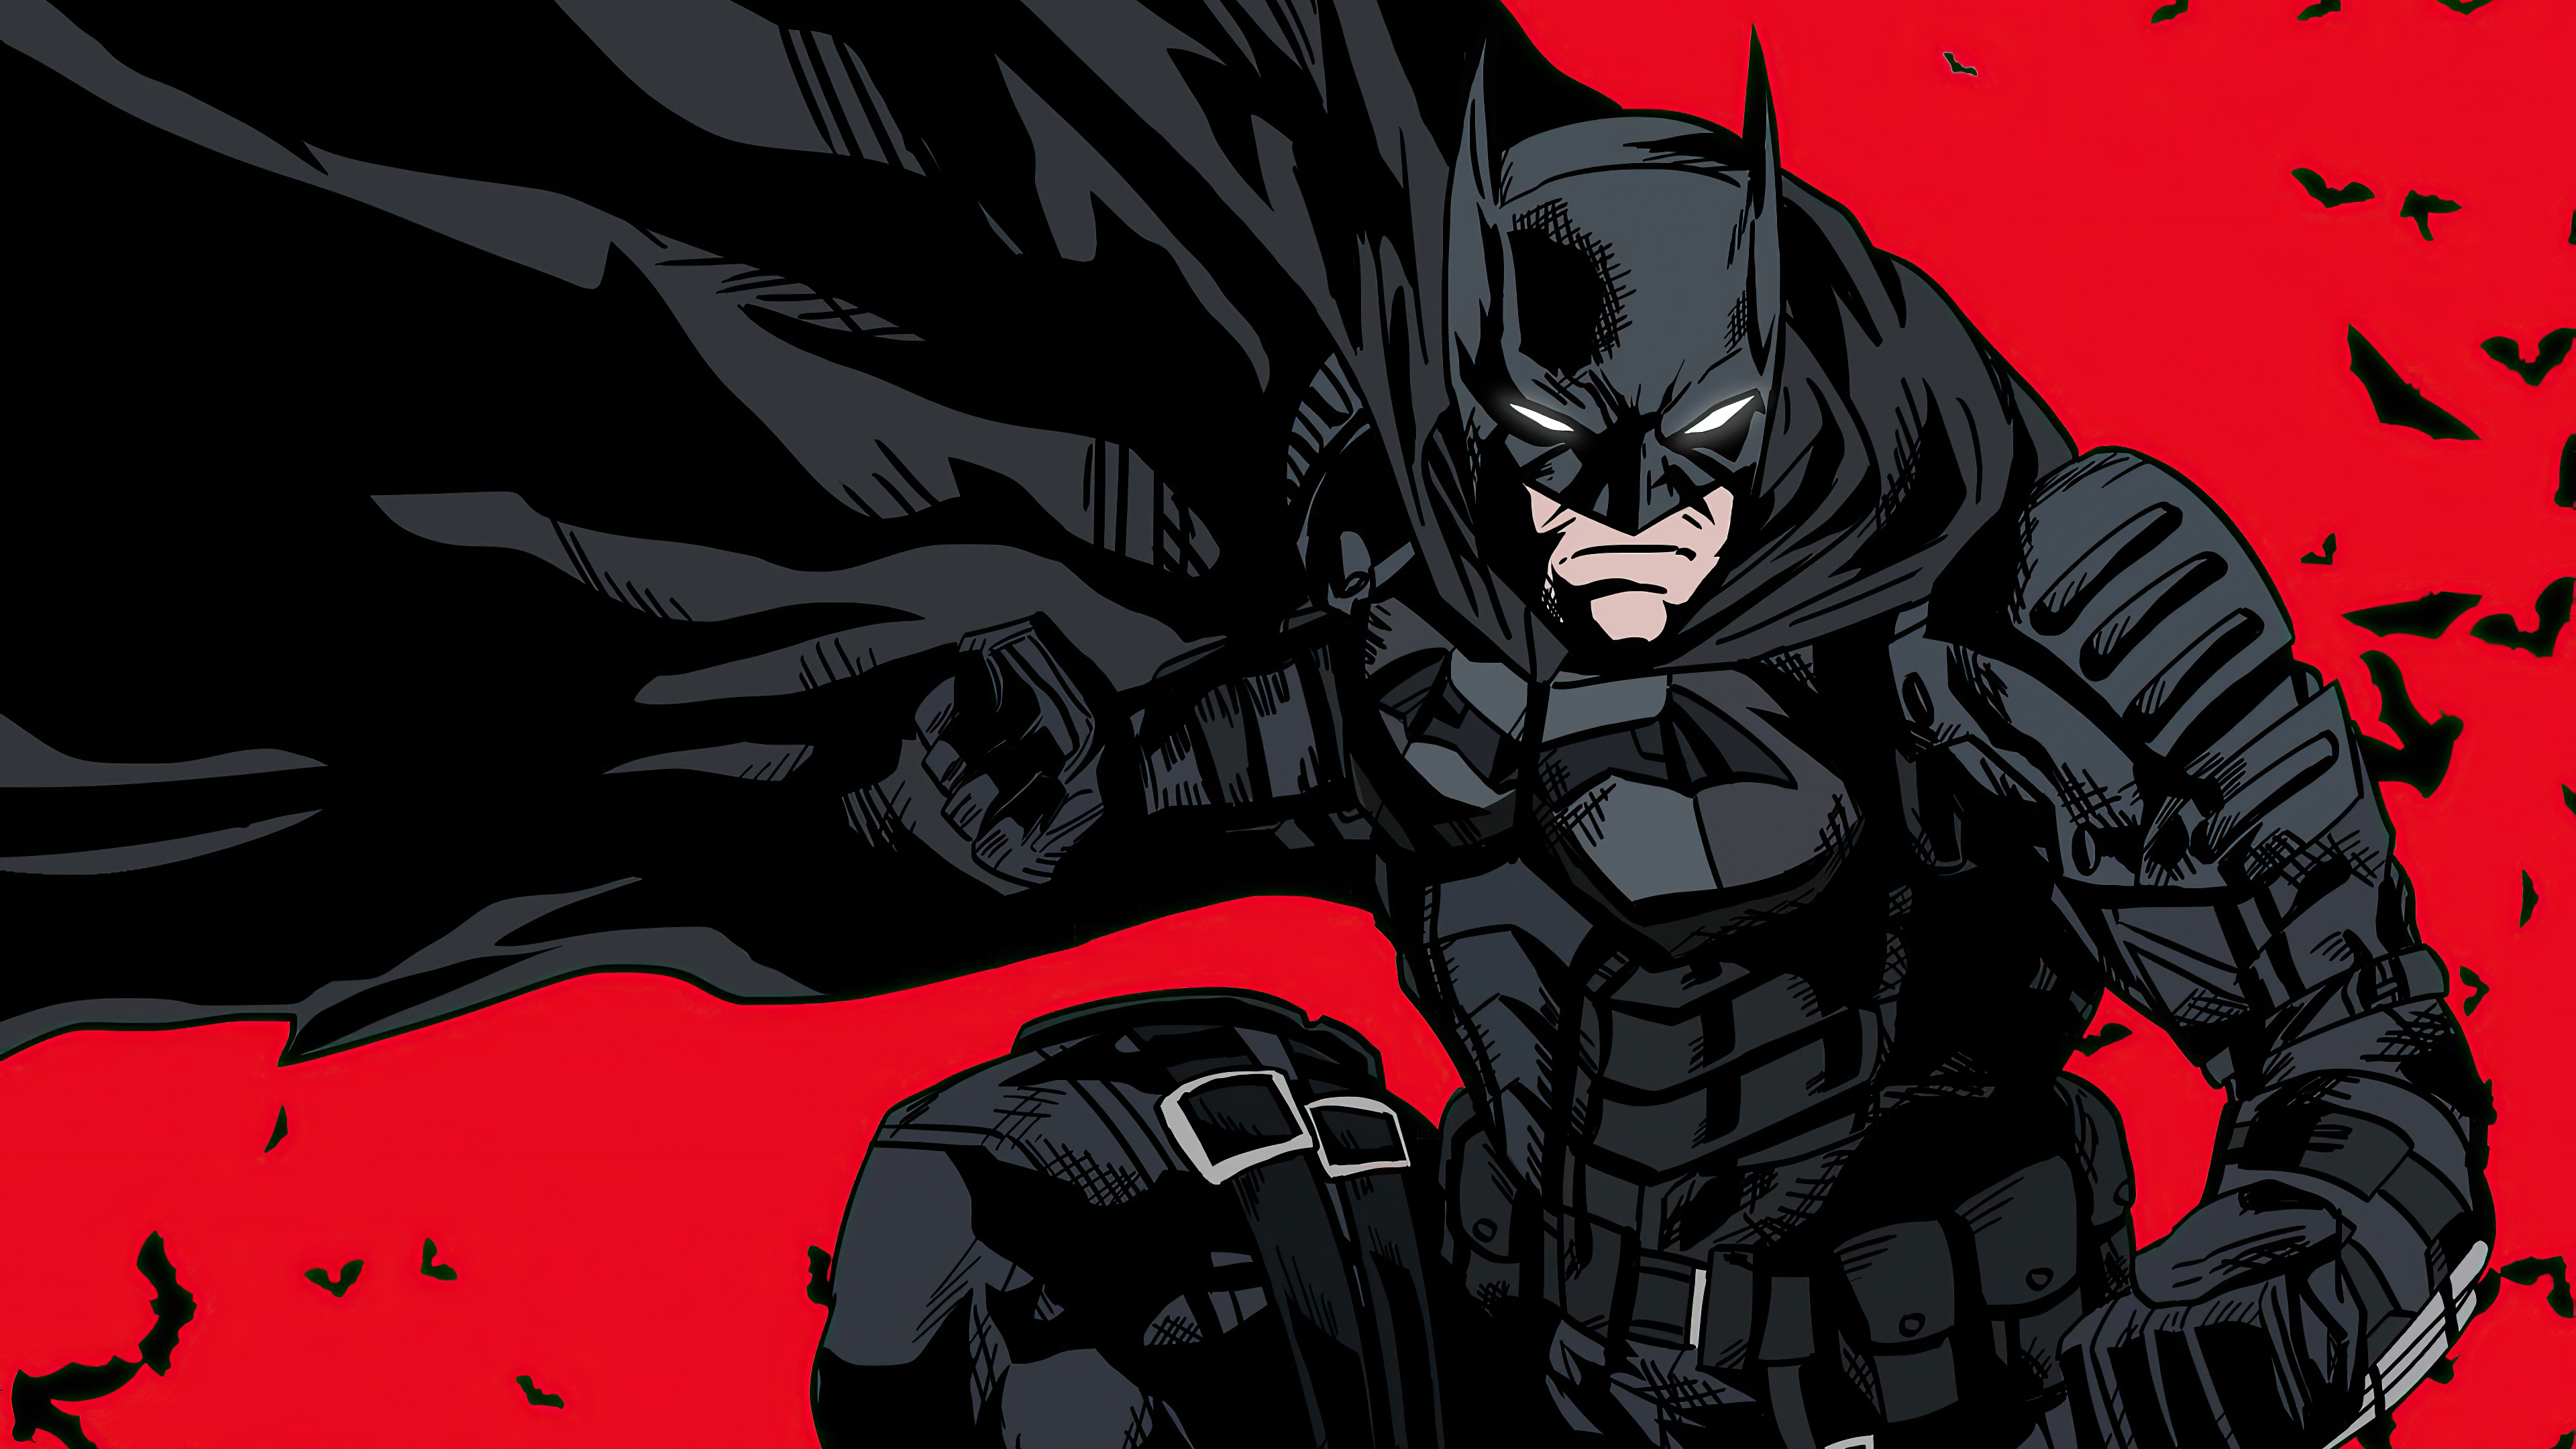 Batman DC Comic 2020 Wallpaper, HD Superheroes 4K Wallpapers, Images,  Photos and Background - Wallpapers Den